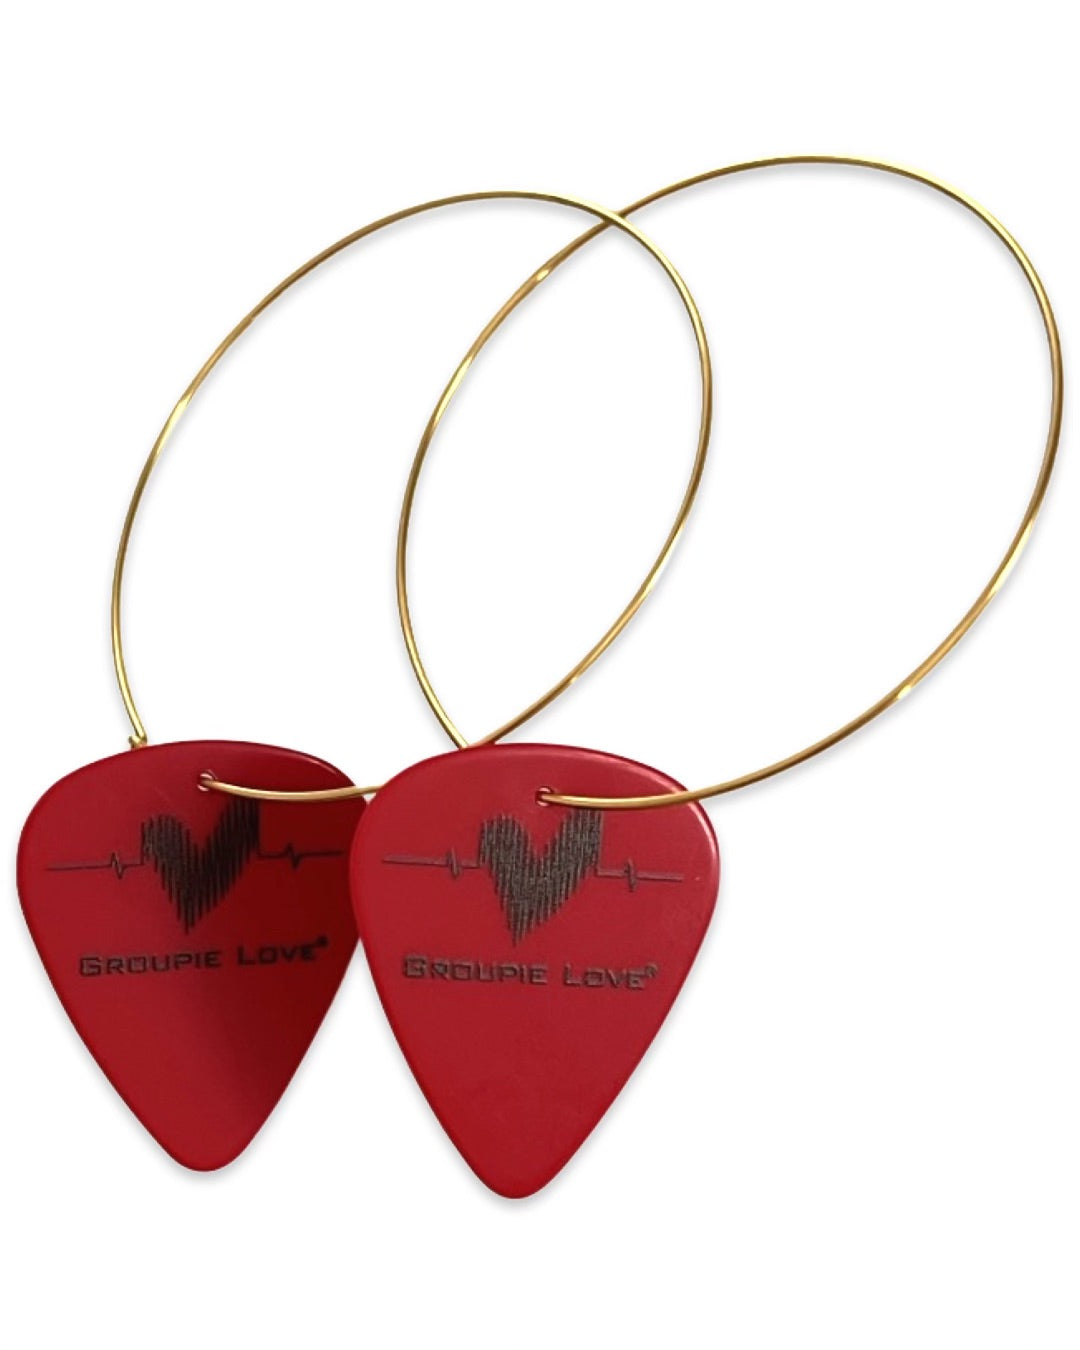 Groupie Love Red Single Guitar Pick Earrings